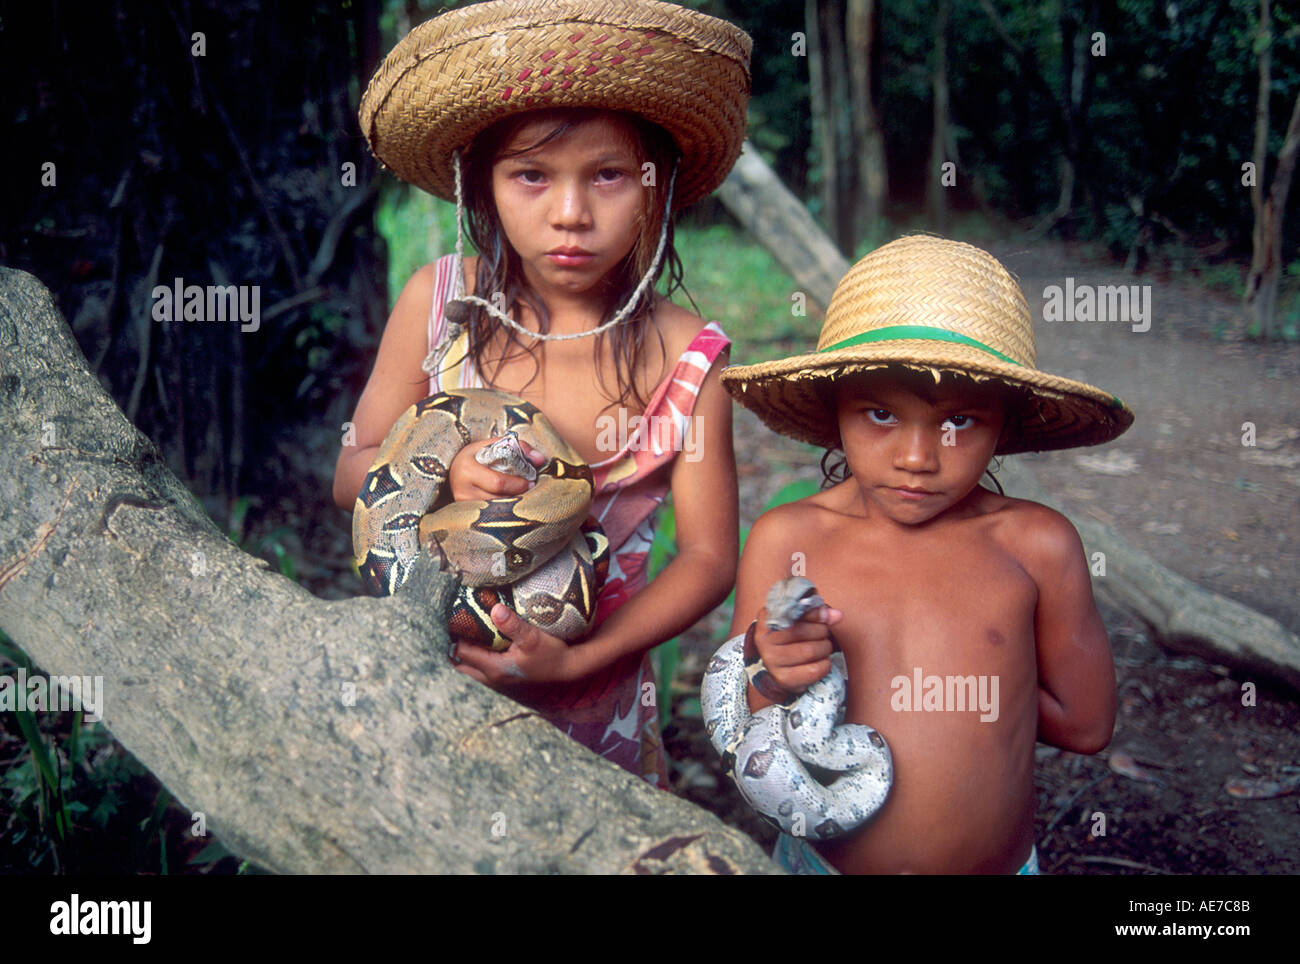 Amazon native children pose with snakes near Manaus Brazil Stock Photo -  Alamy